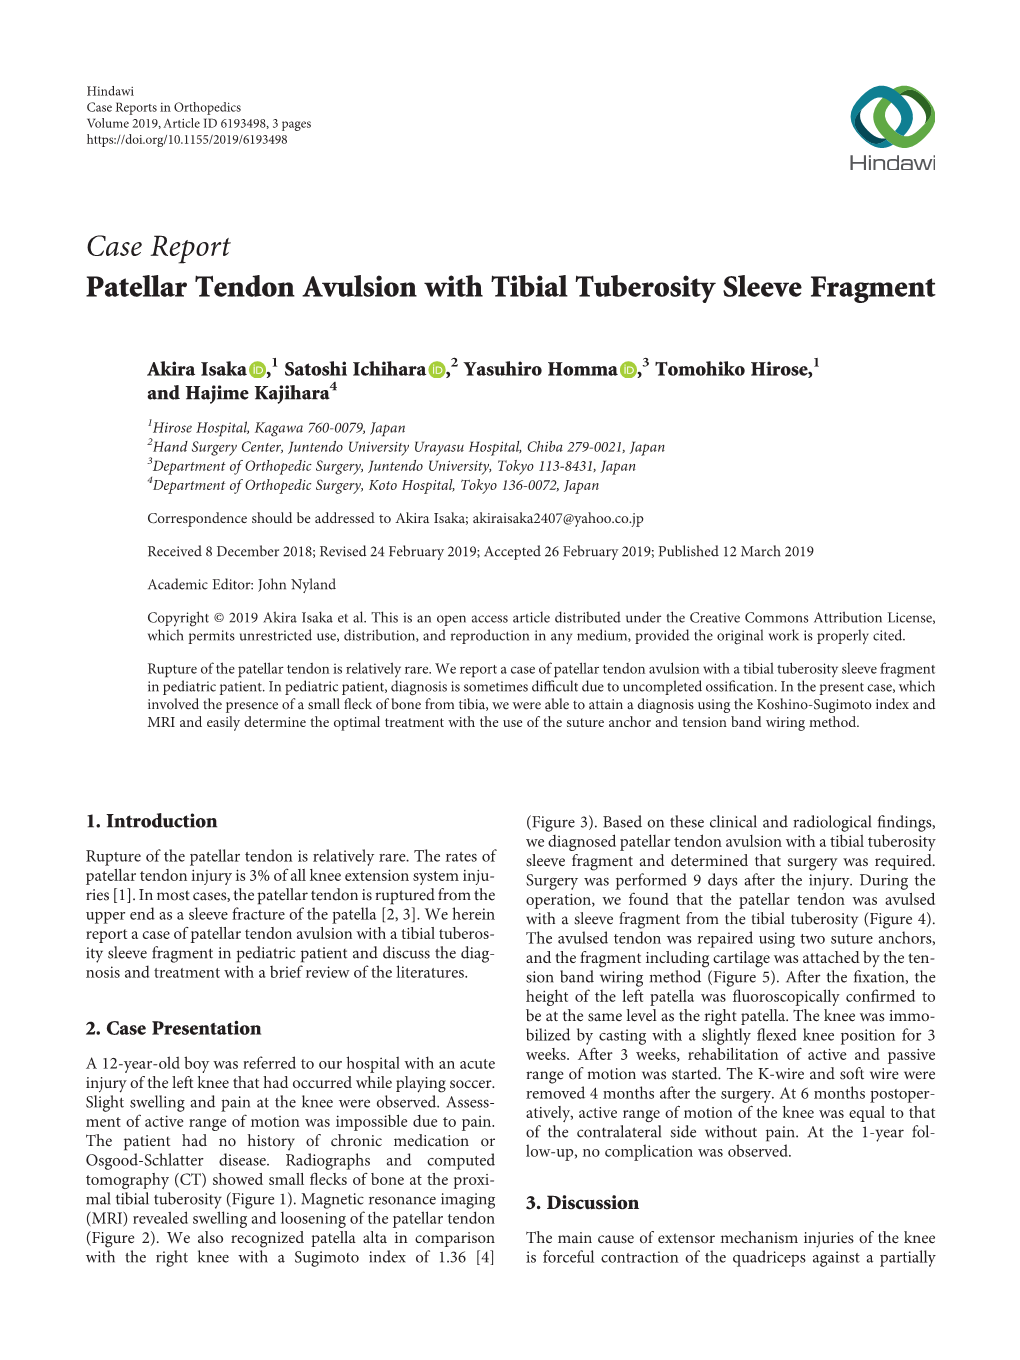 Case Report Patellar Tendon Avulsion with Tibial Tuberosity Sleeve Fragment